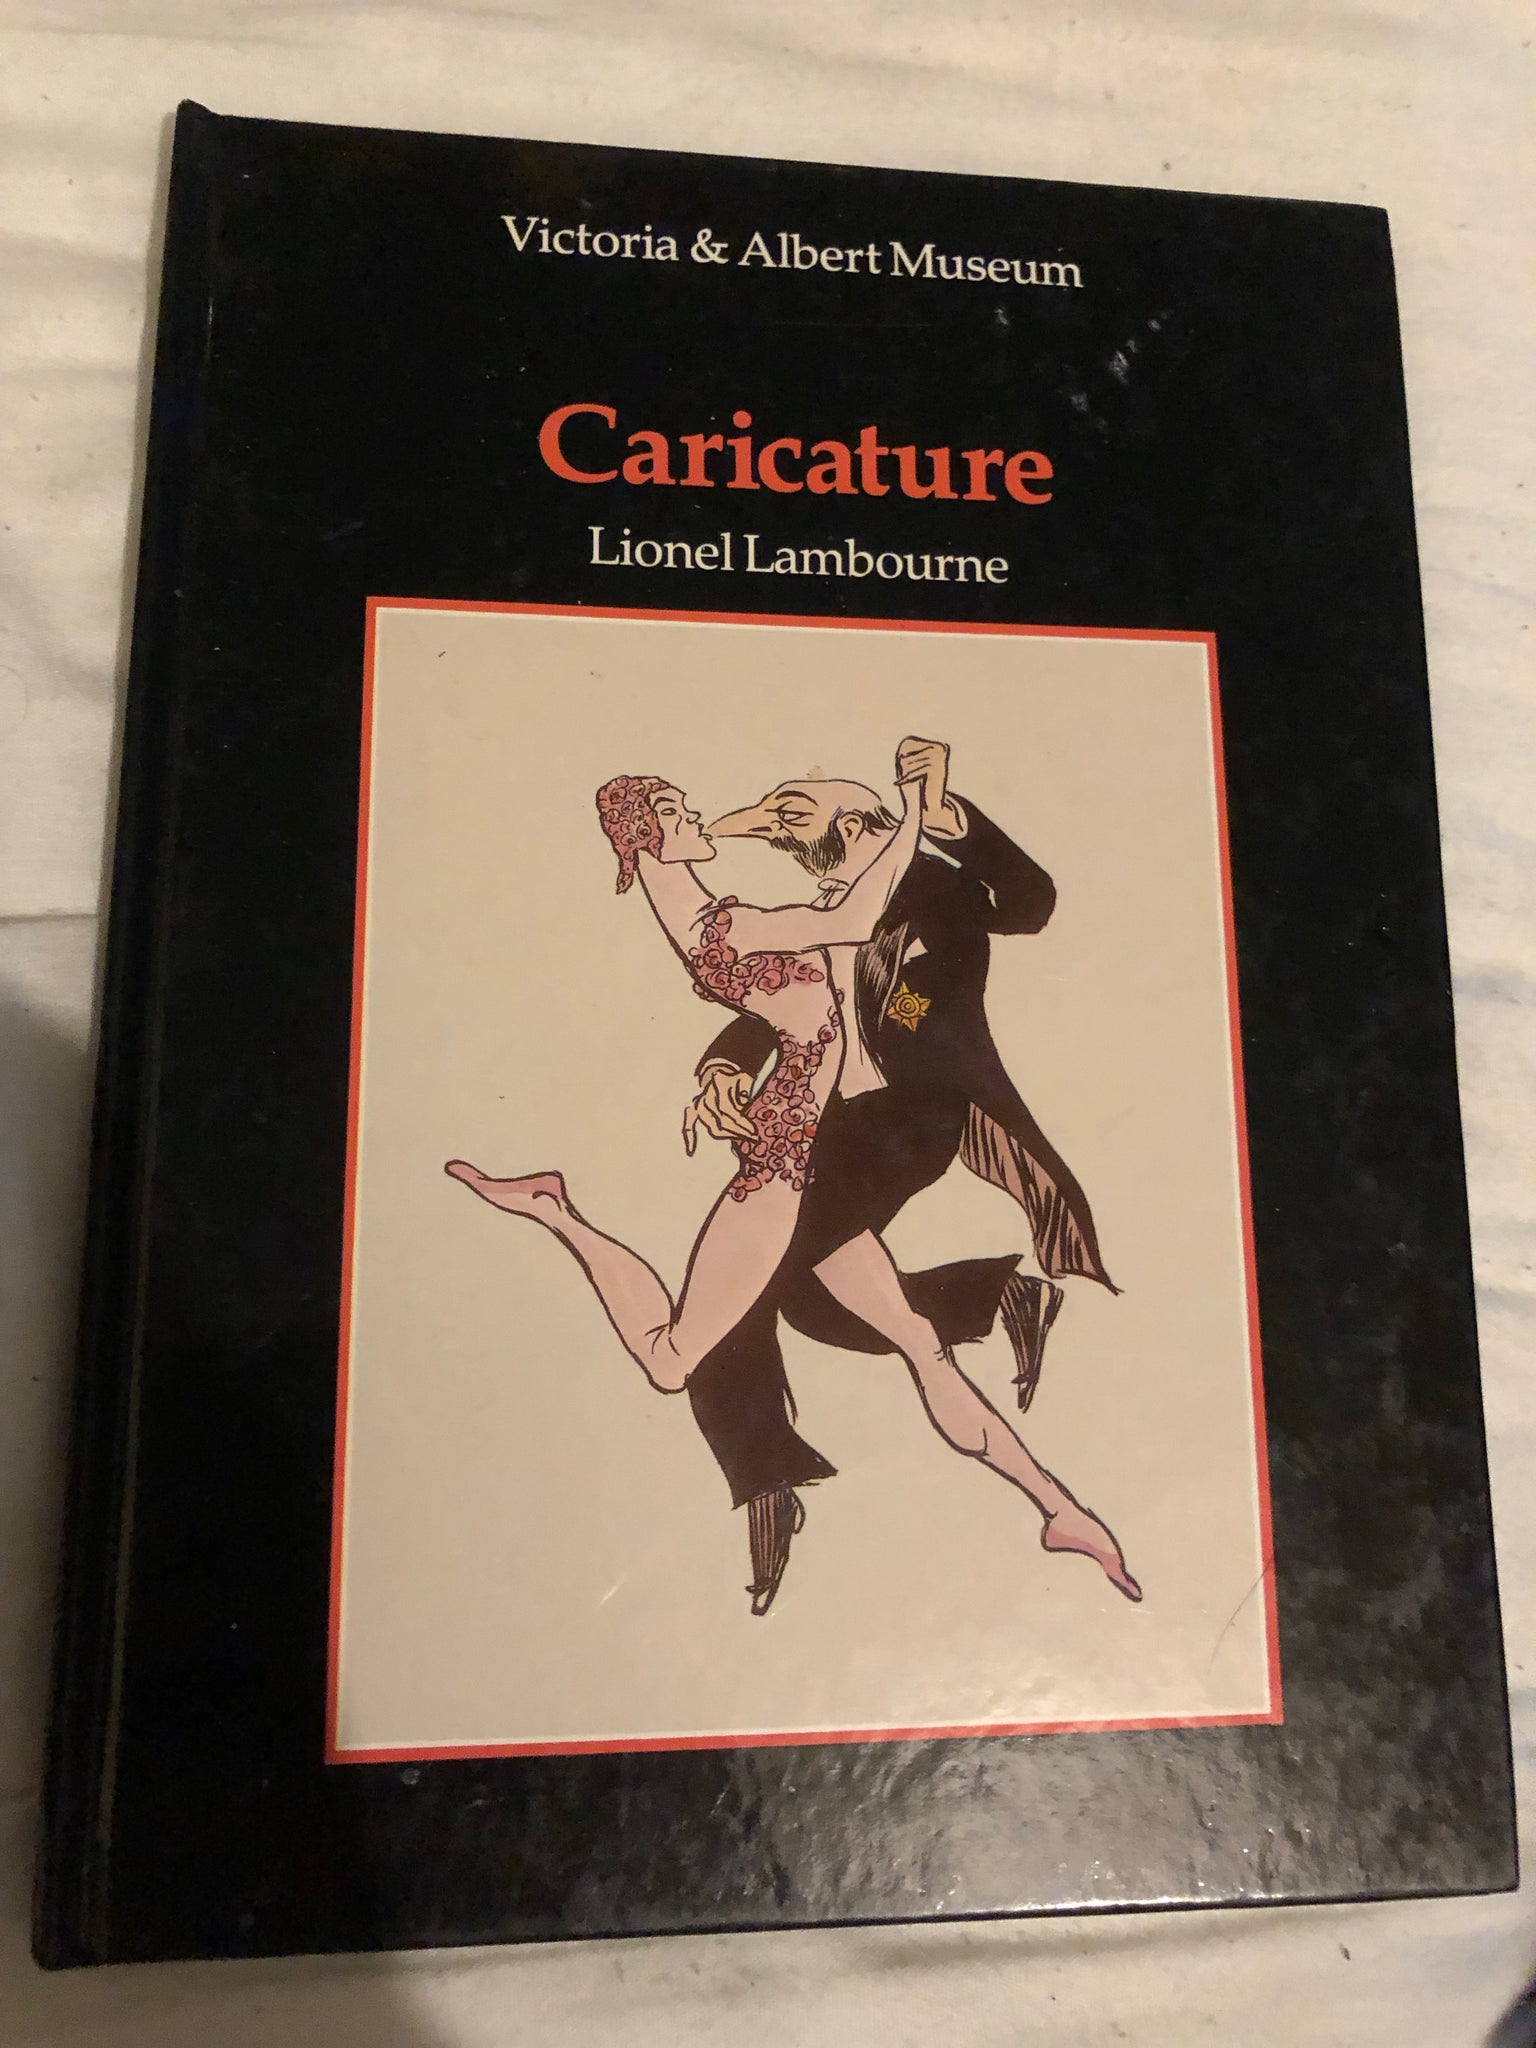 Victoria & Albert Museum Caricature Book by Lionel Lambourne 1983